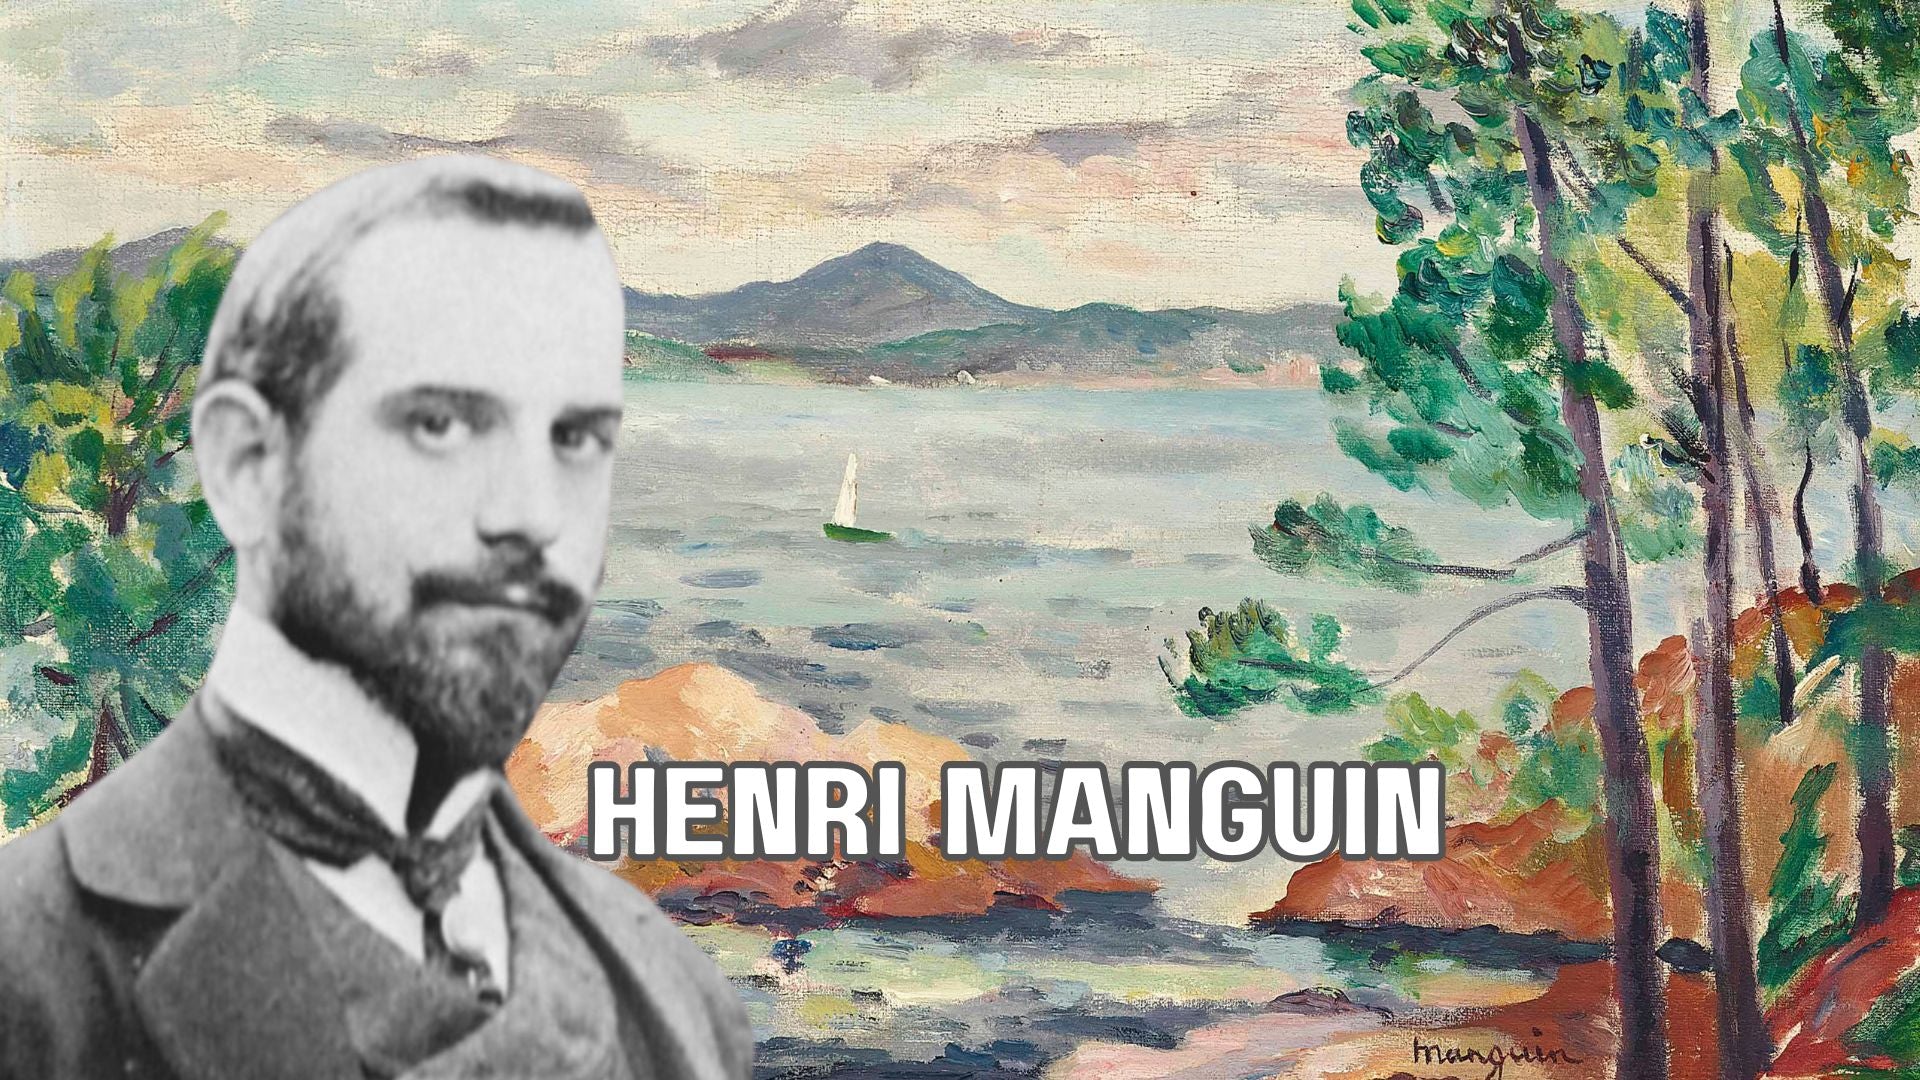 Henri Manguin: A Fauvist Master